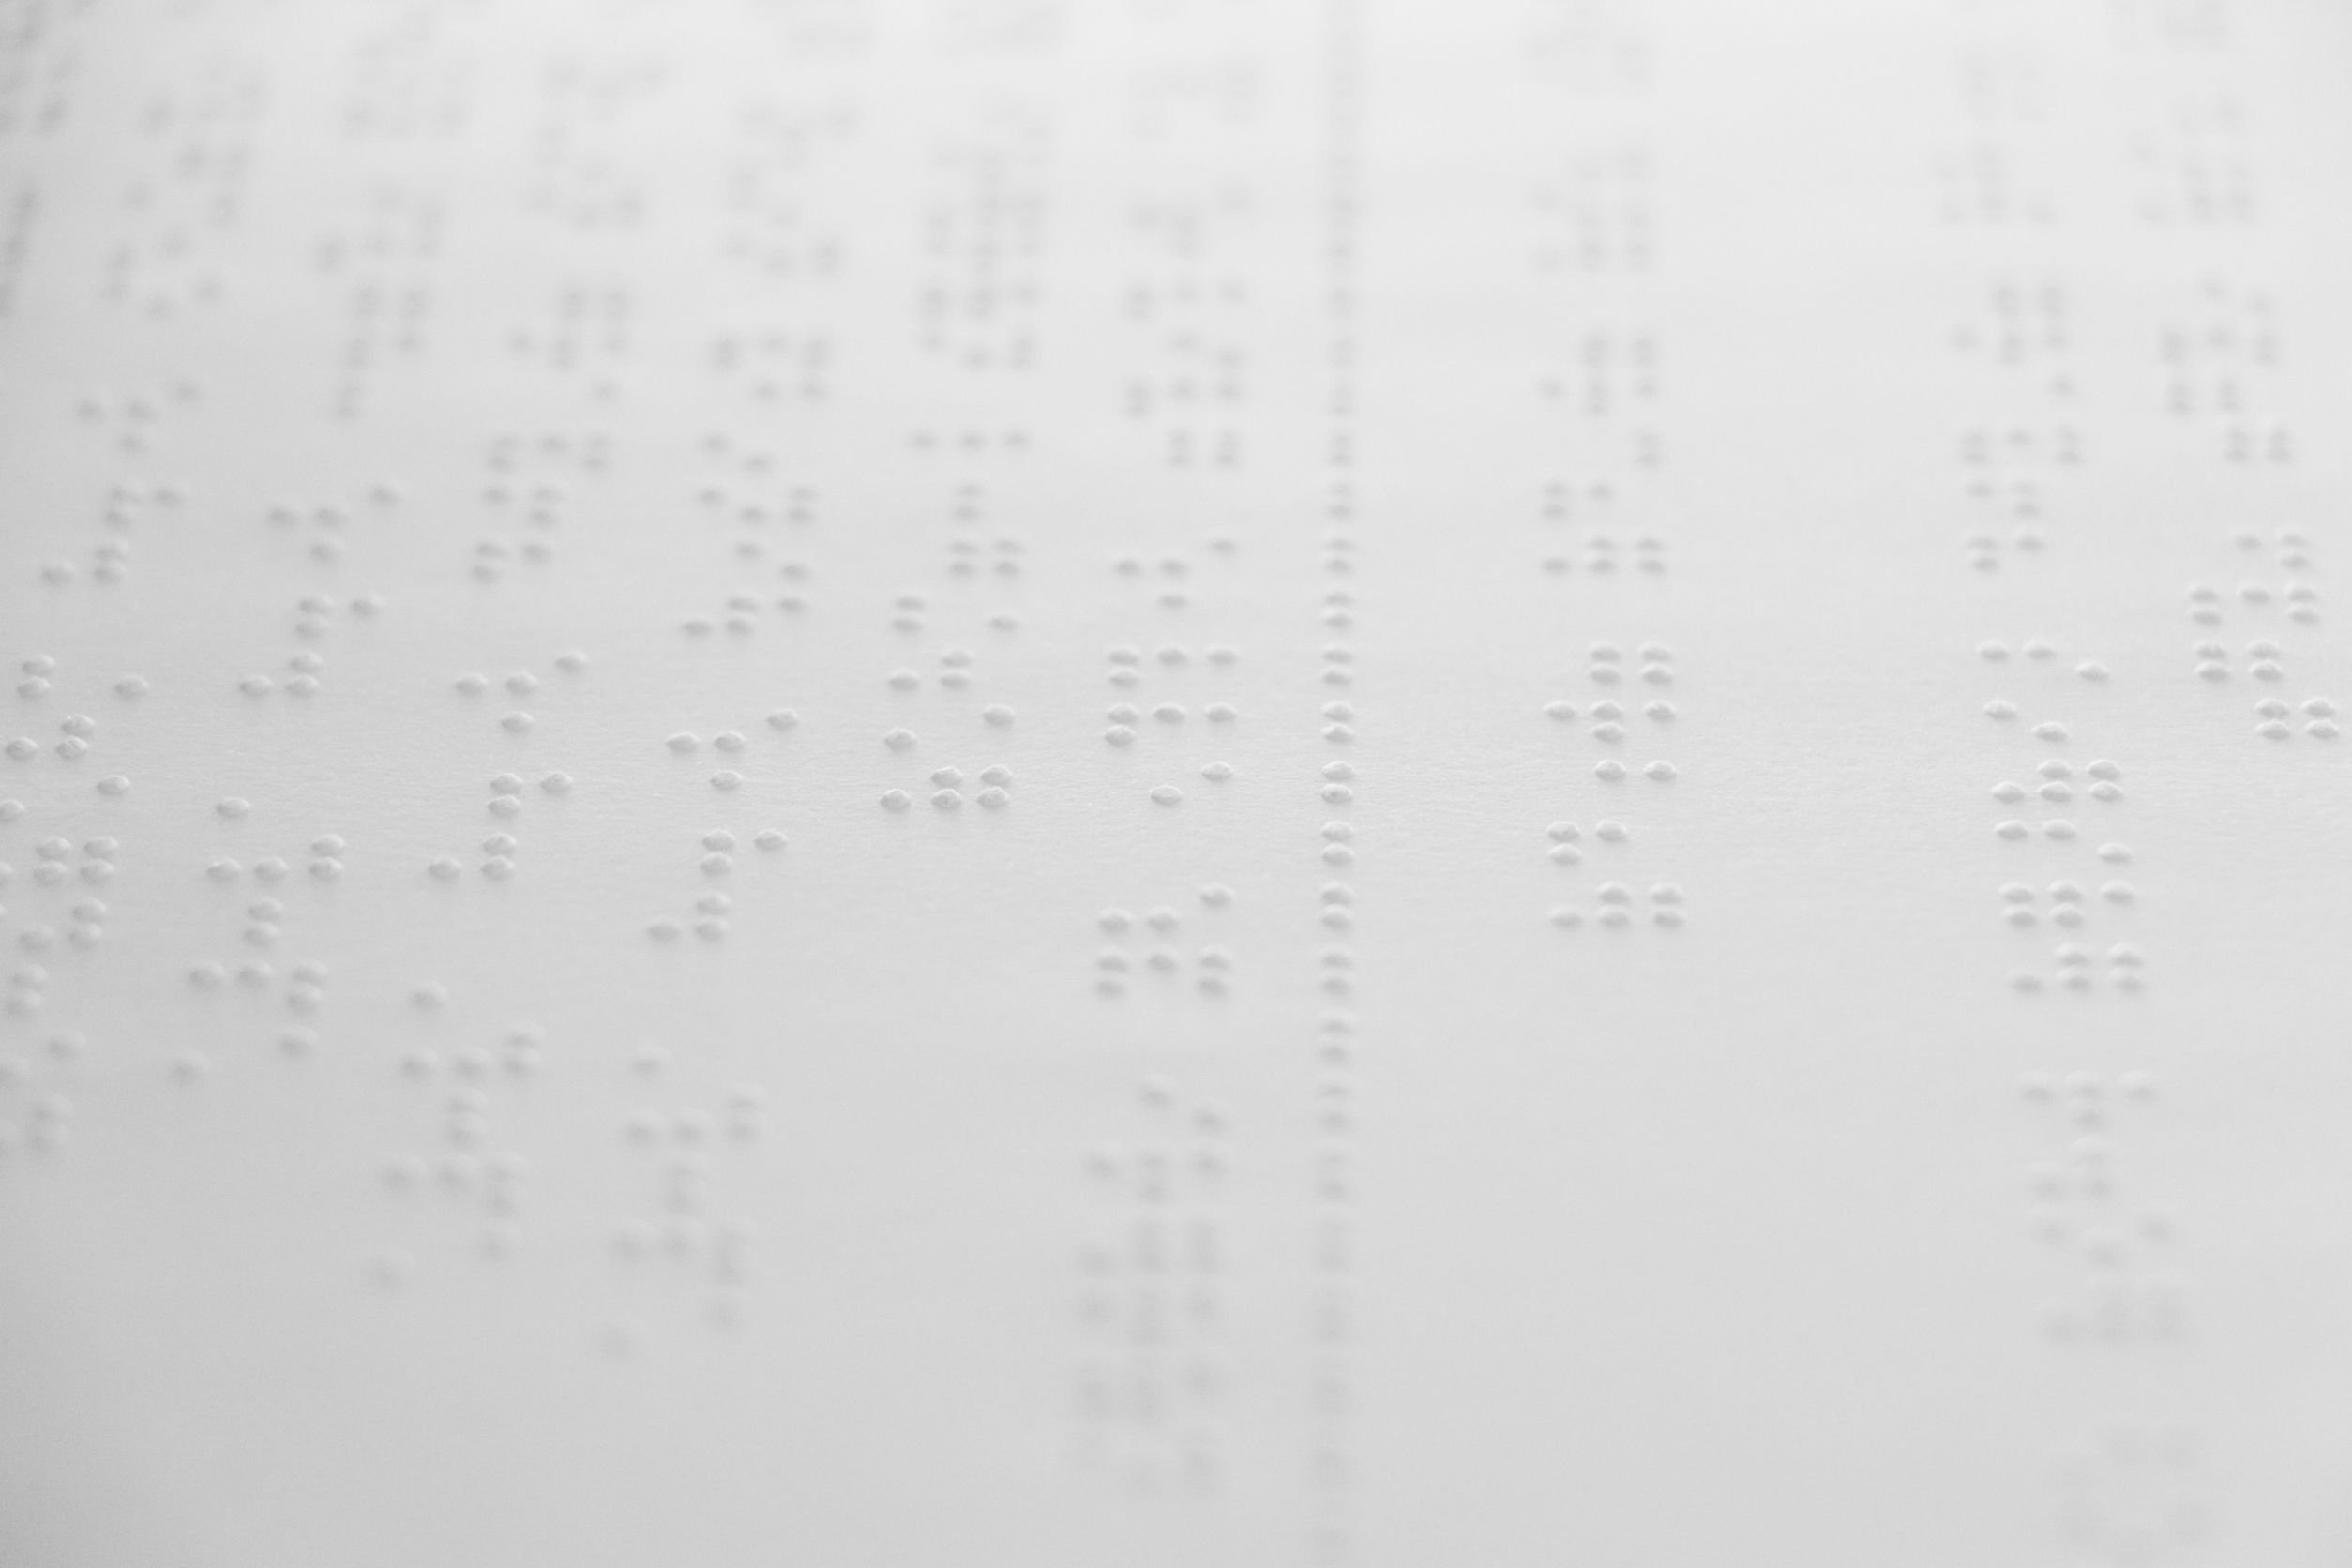 Papel em braille